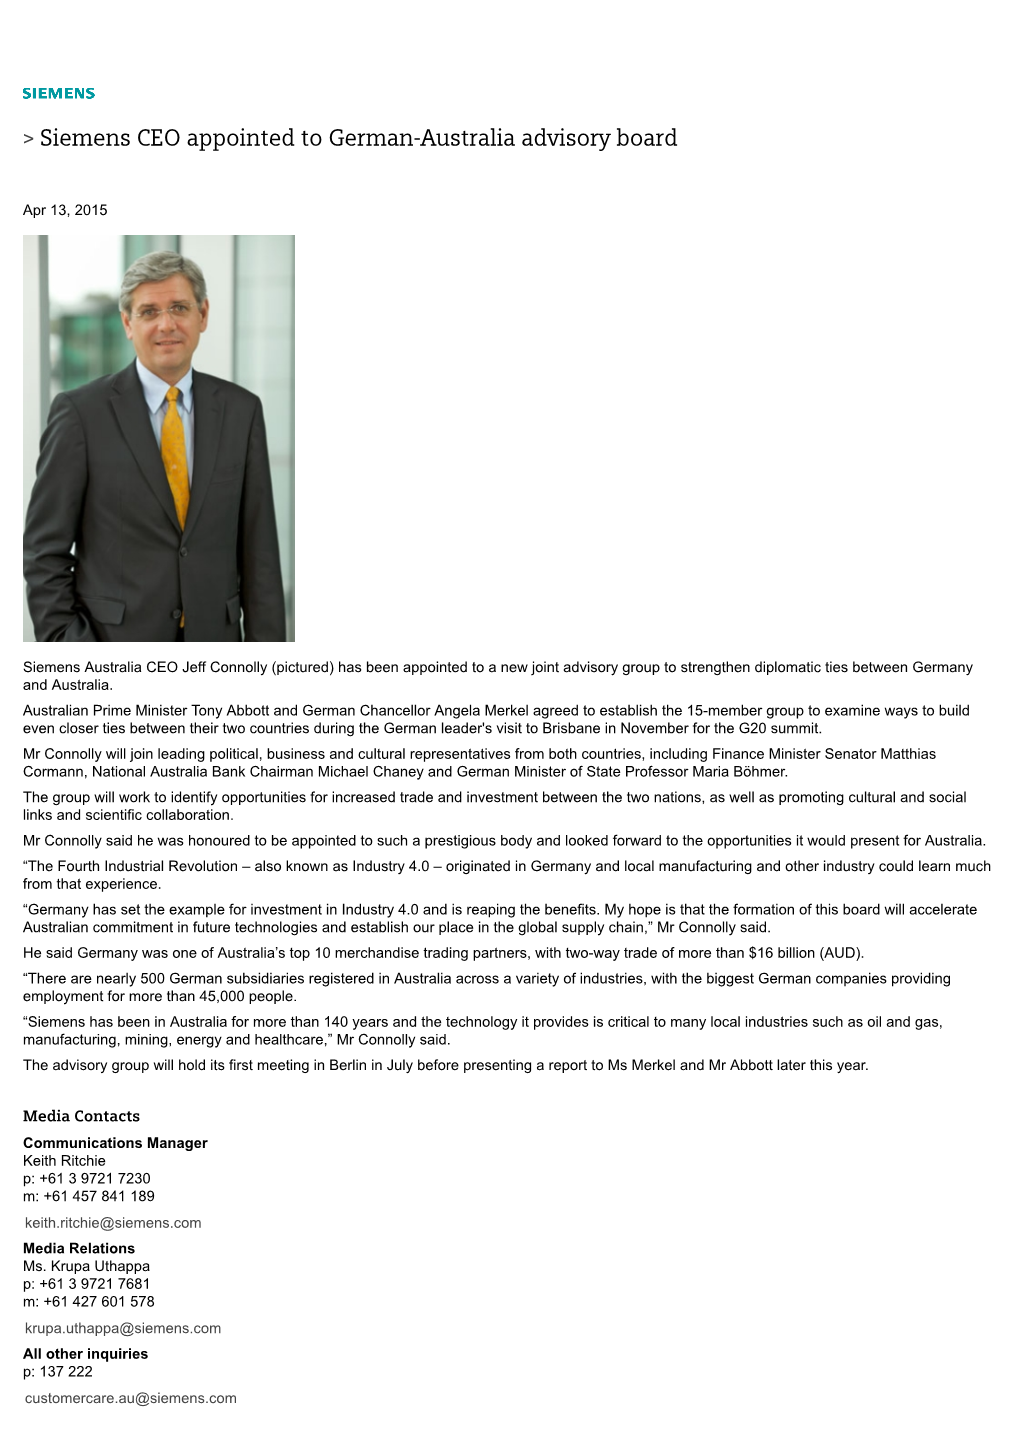 Siemens CEO Appointed to German-Australia Advisory Board